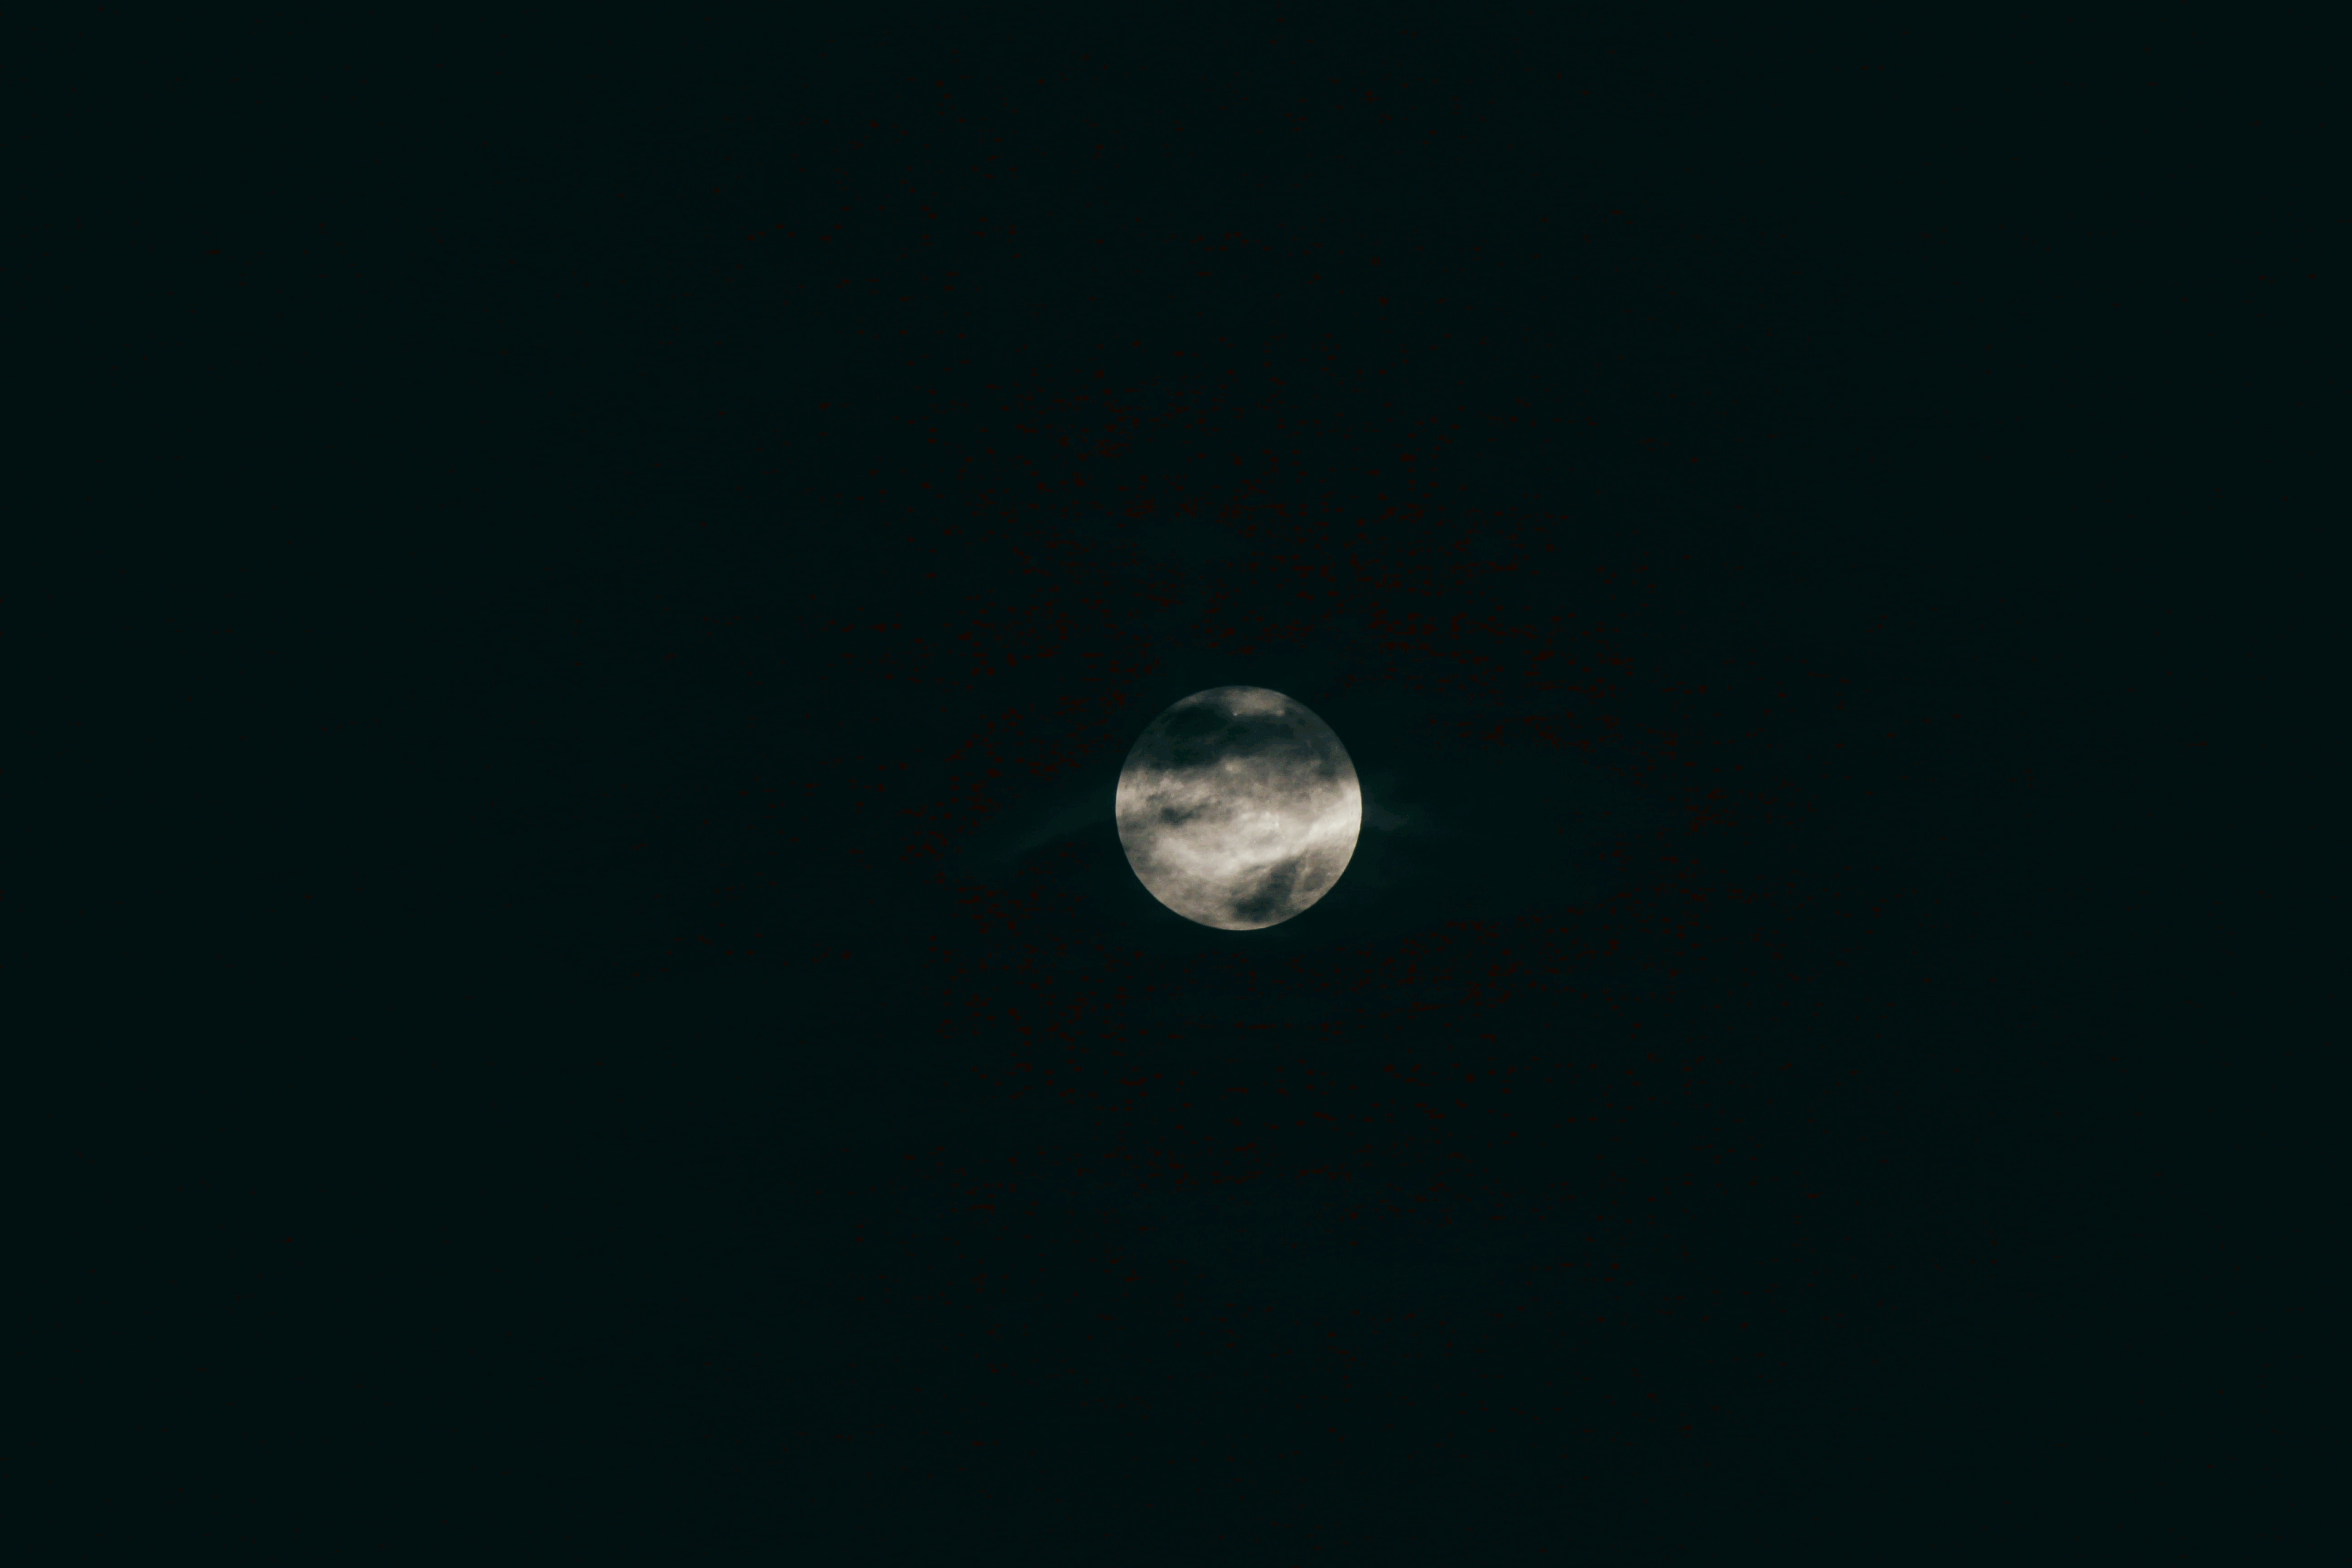 HD for desktop 1080p Moon planet, full moon, dark